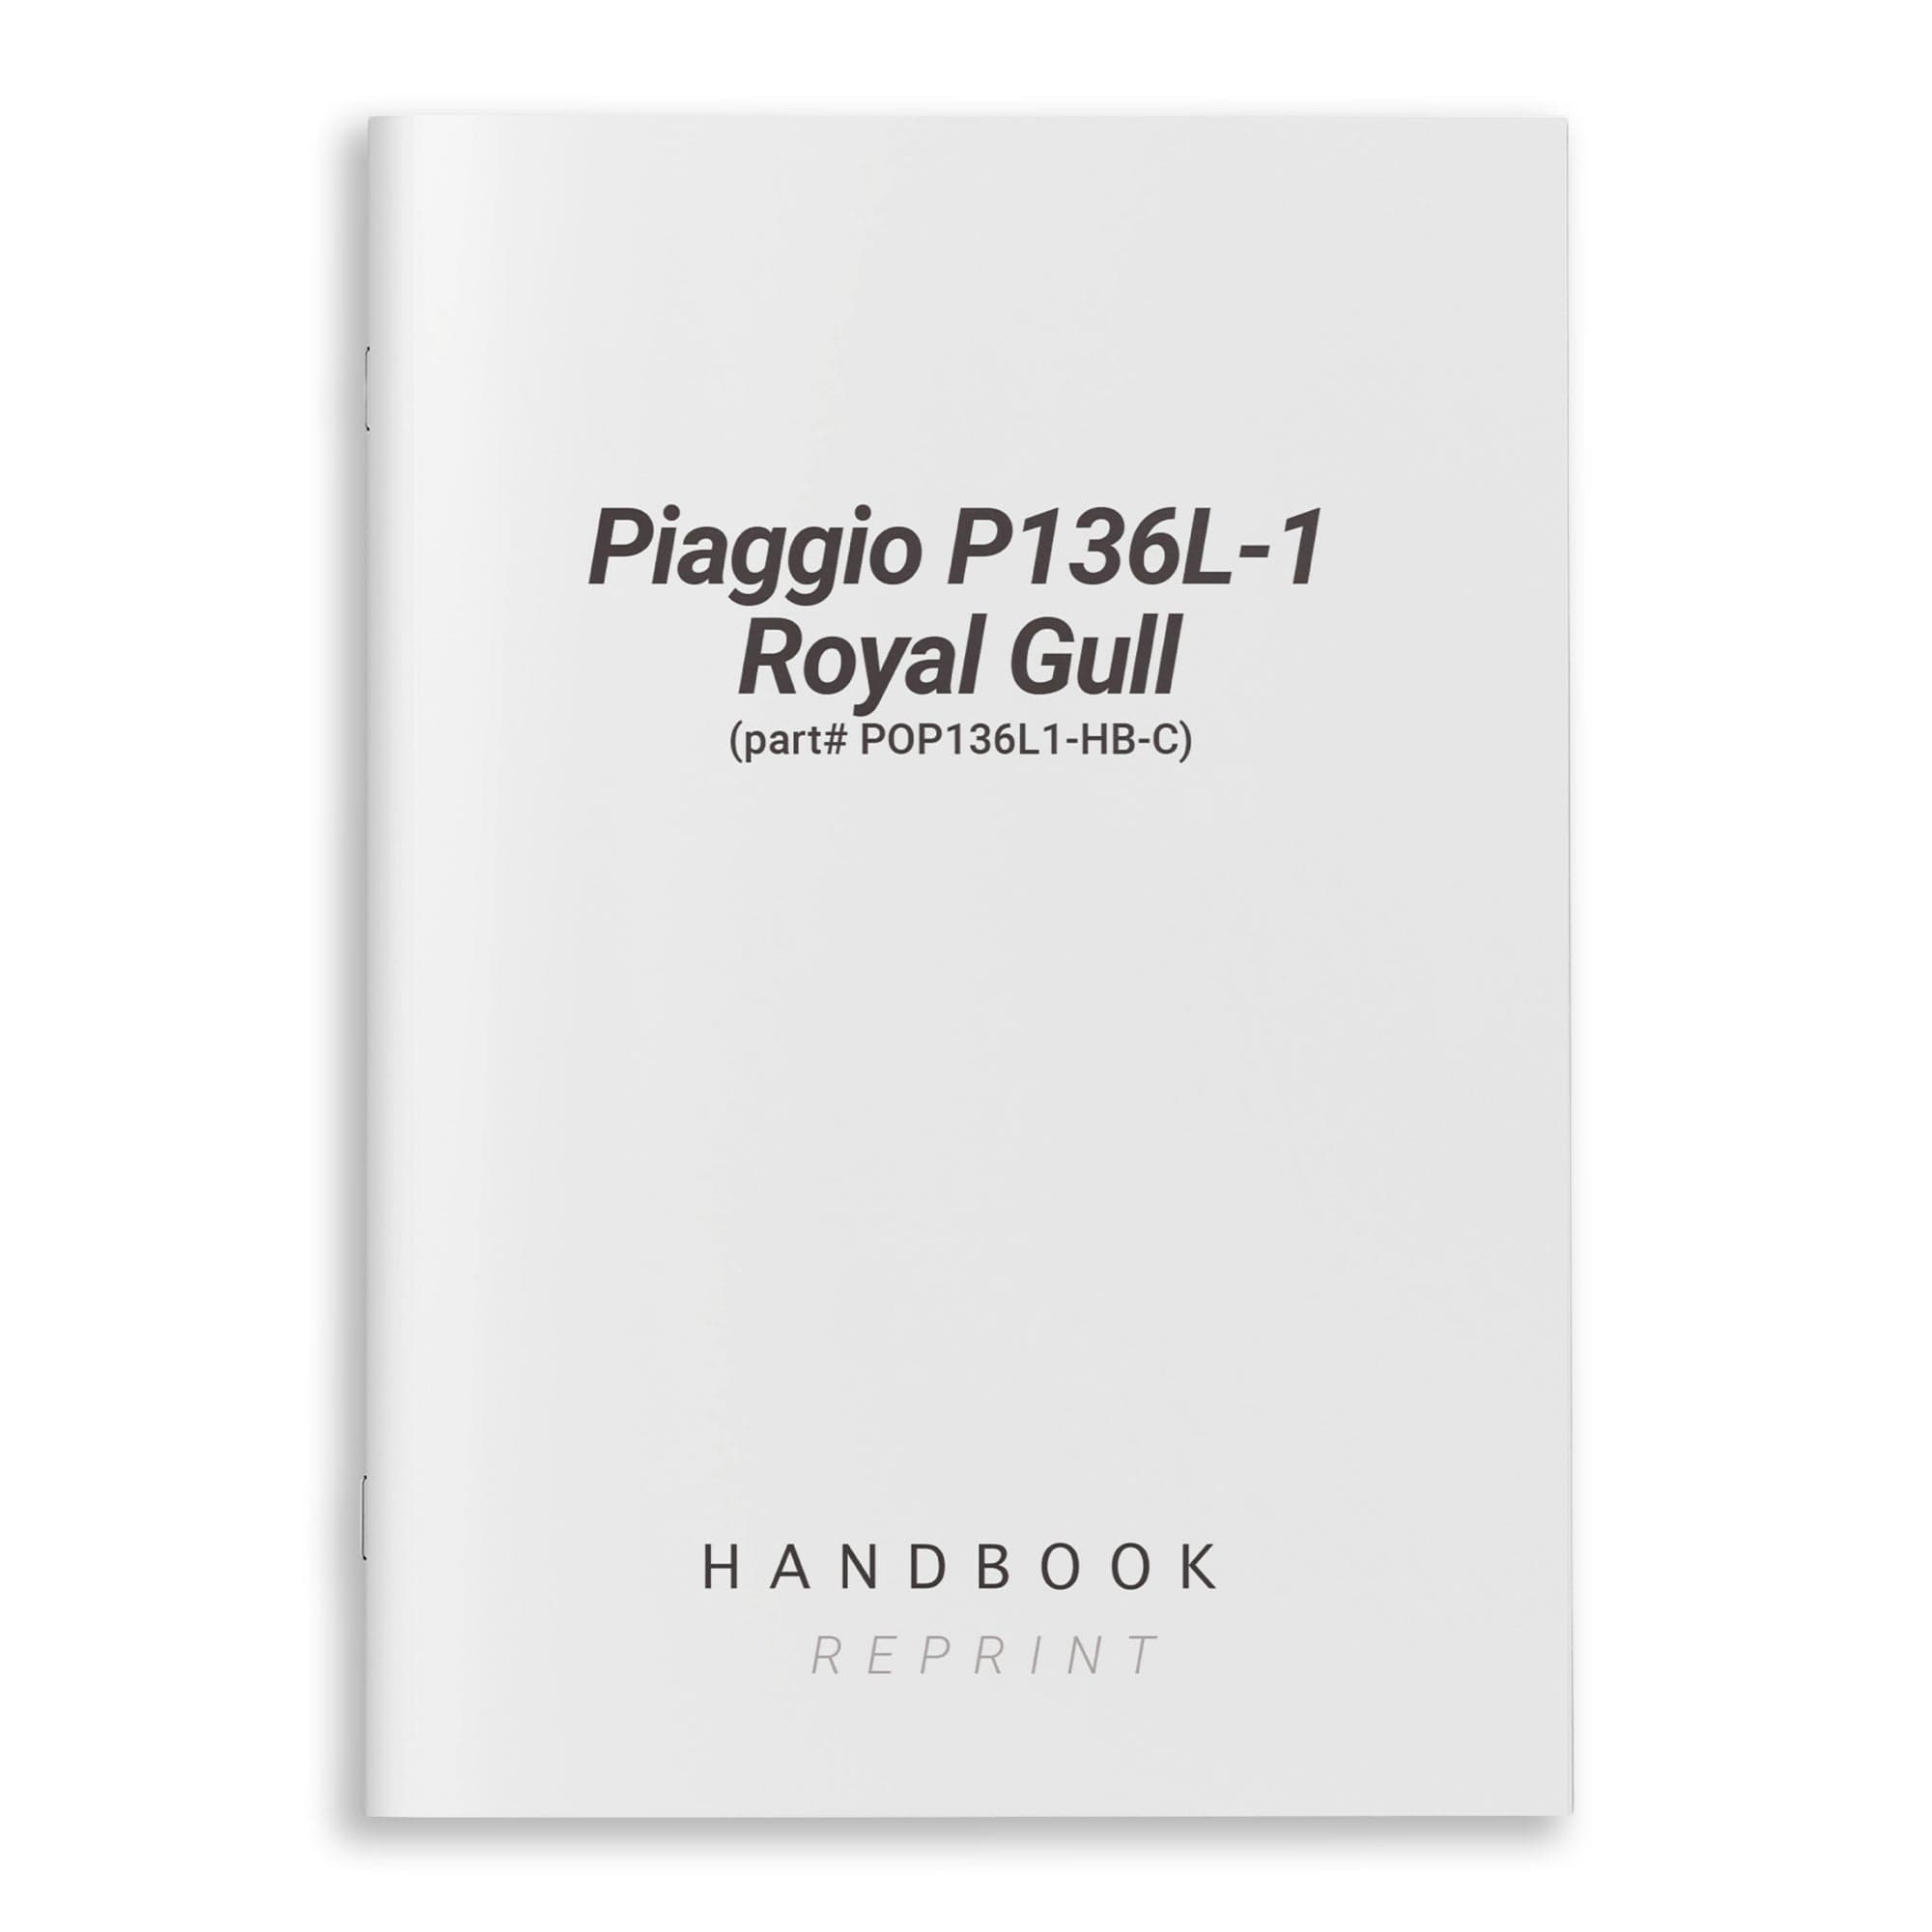 Piaggio P136L-1 Royal Gull Handbook (part# POP136L1-HB-C) - PilotMall.com